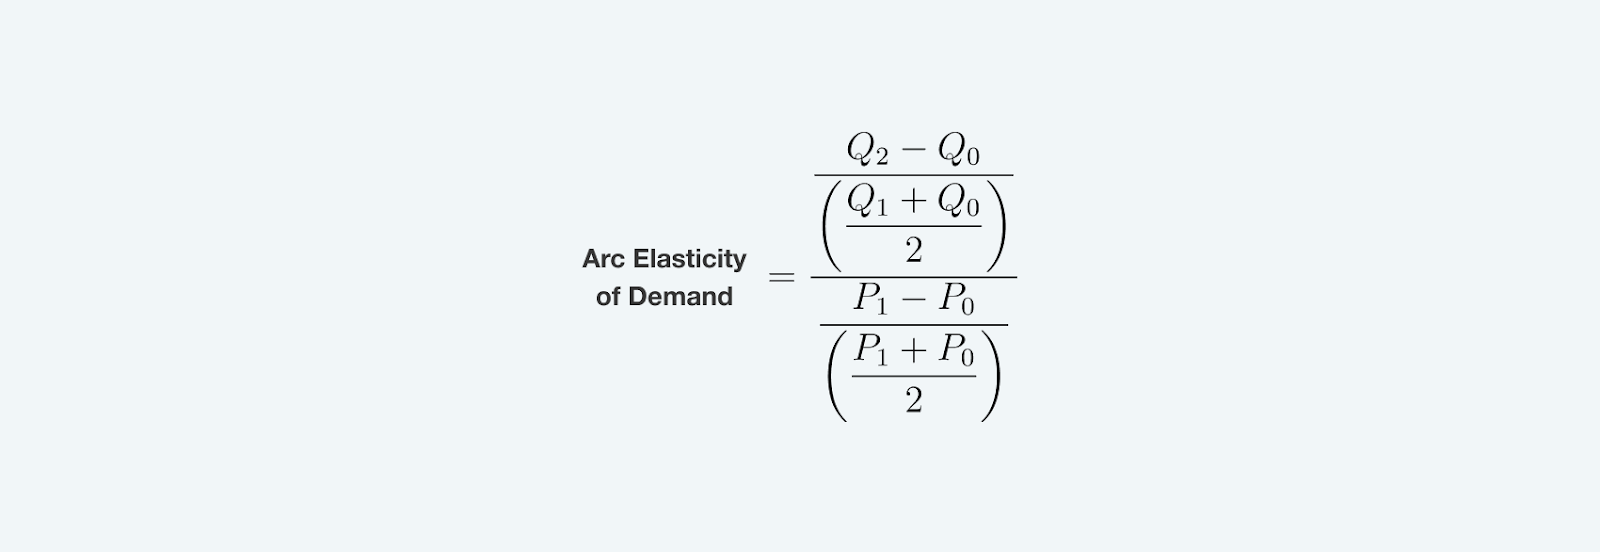 arc-price-elasticity-of-demand-formula